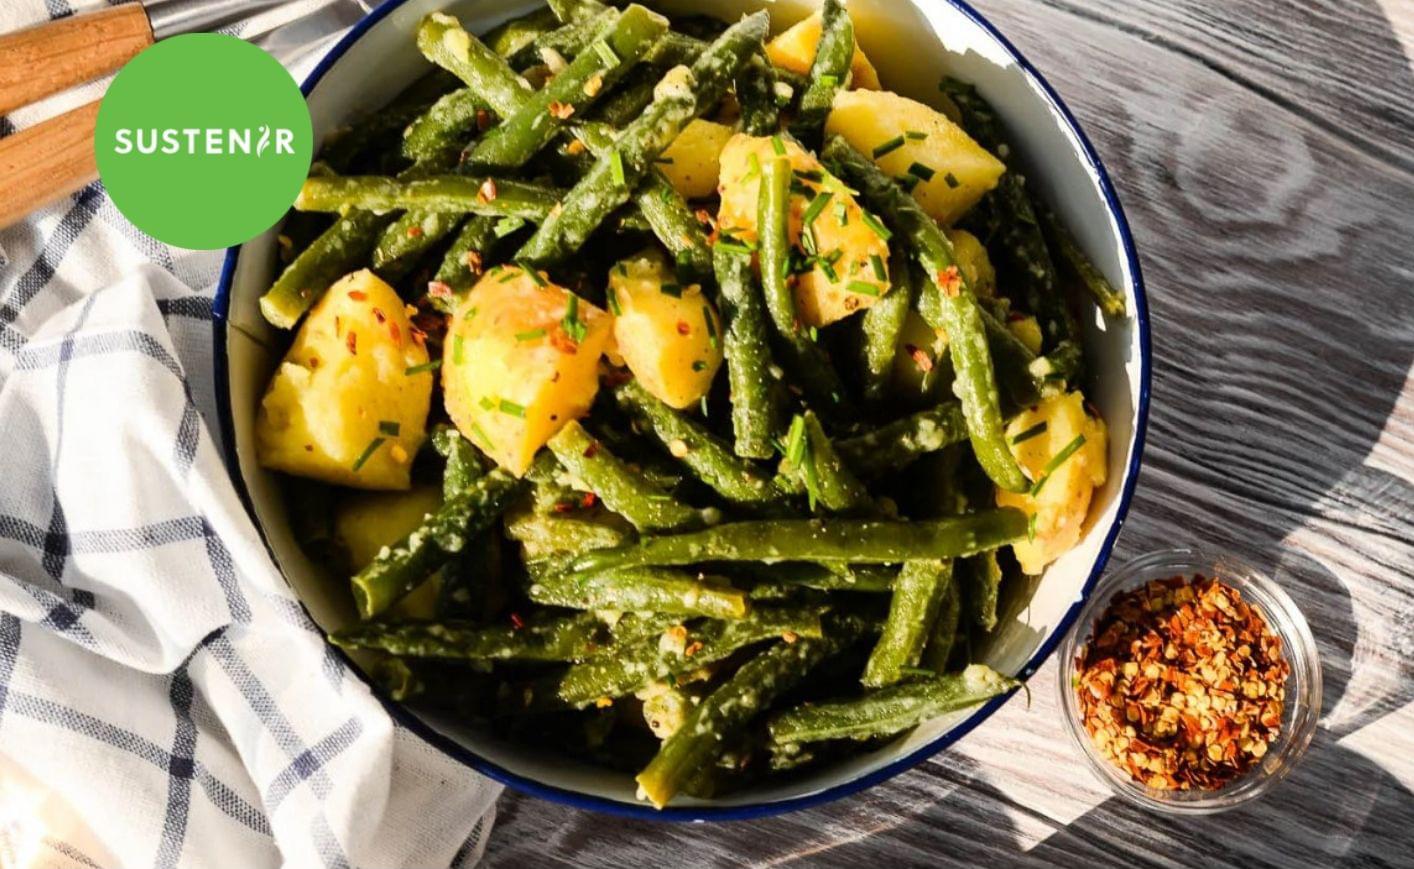 Sustenir Kale Pesto, Potato and Green Bean Salad